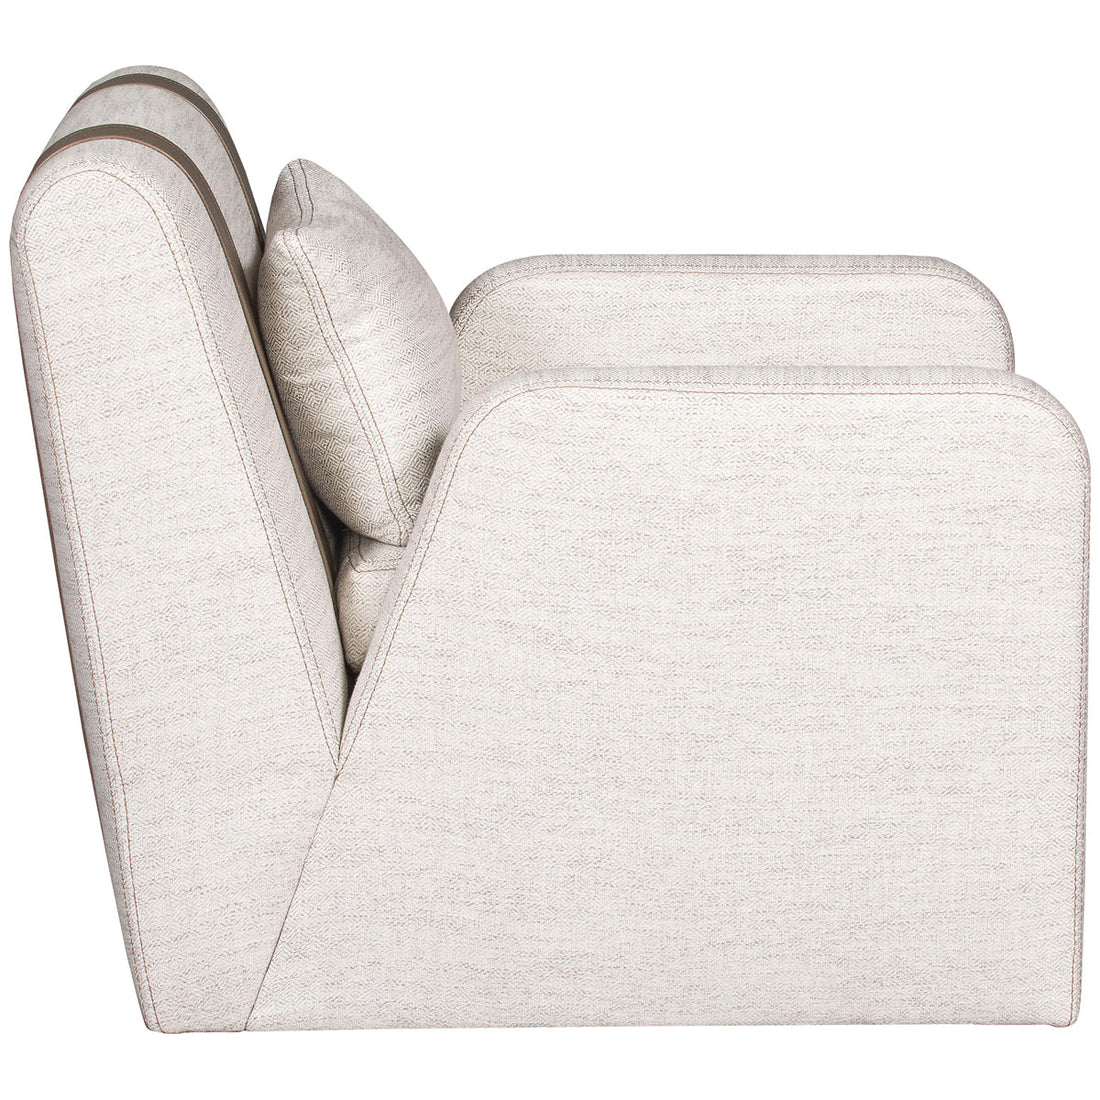 Vanguard Furniture Colvin Swivel Chair